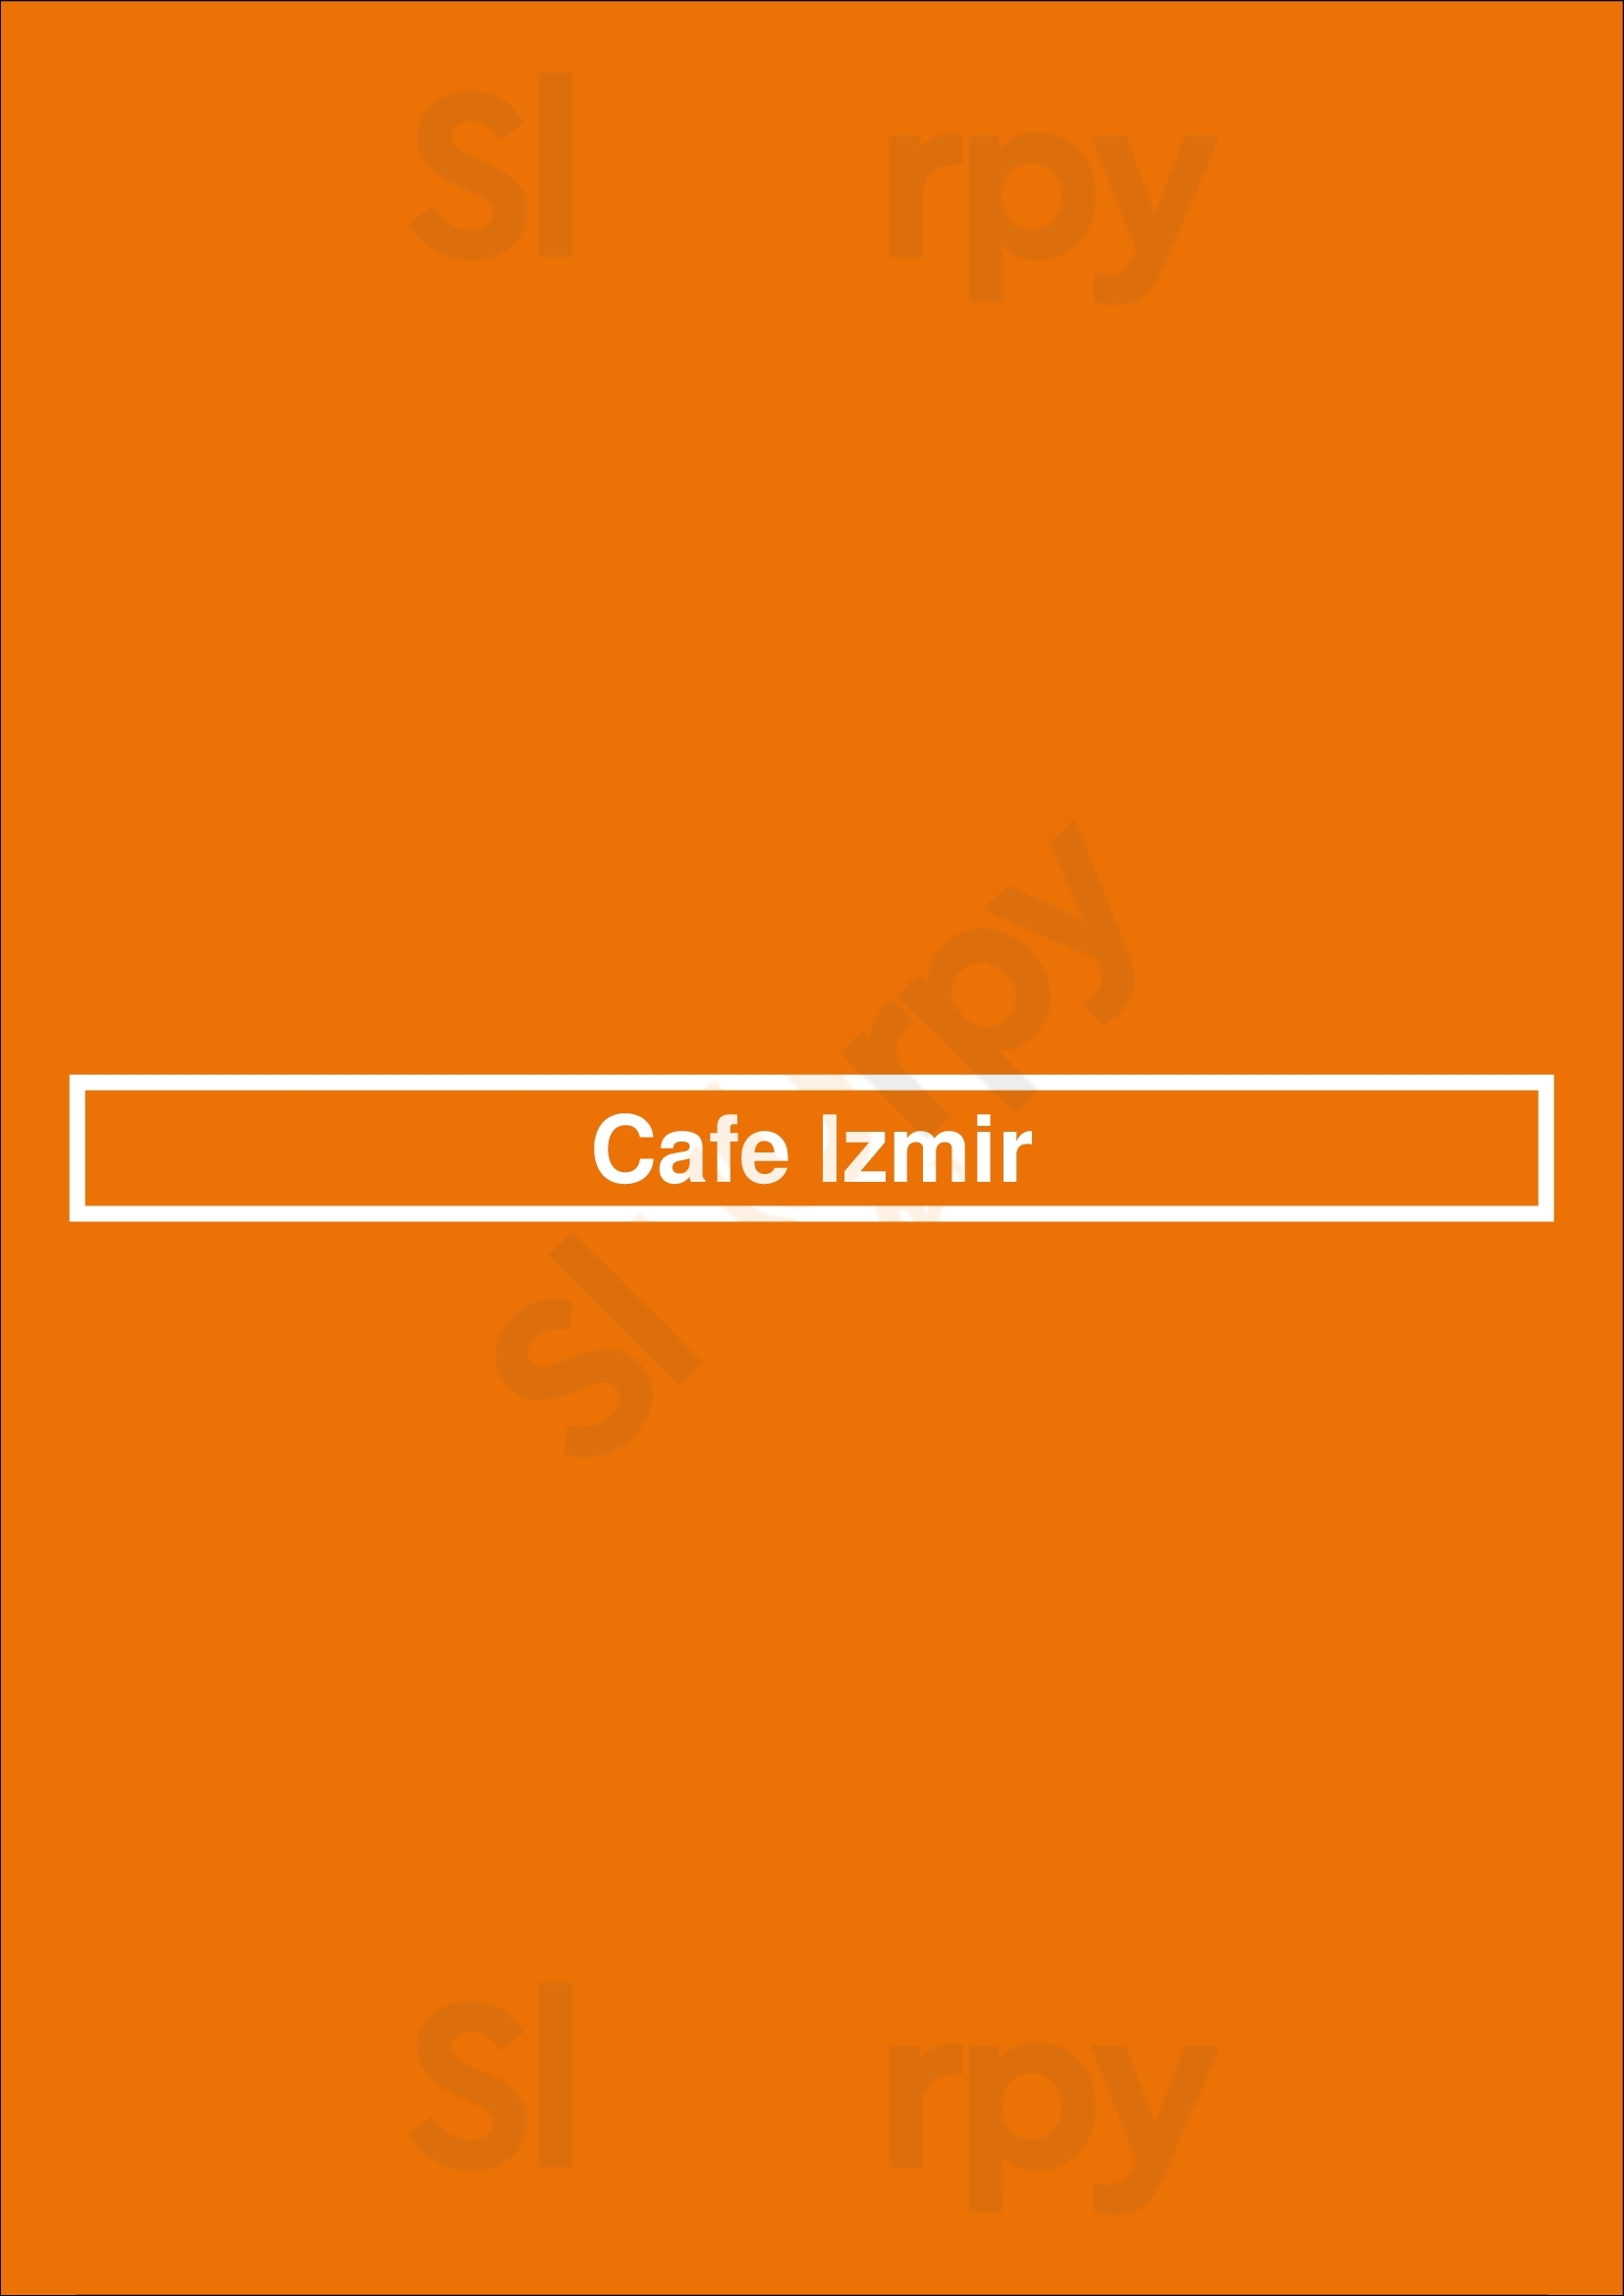 Cafe Izmir Dallas Menu - 1